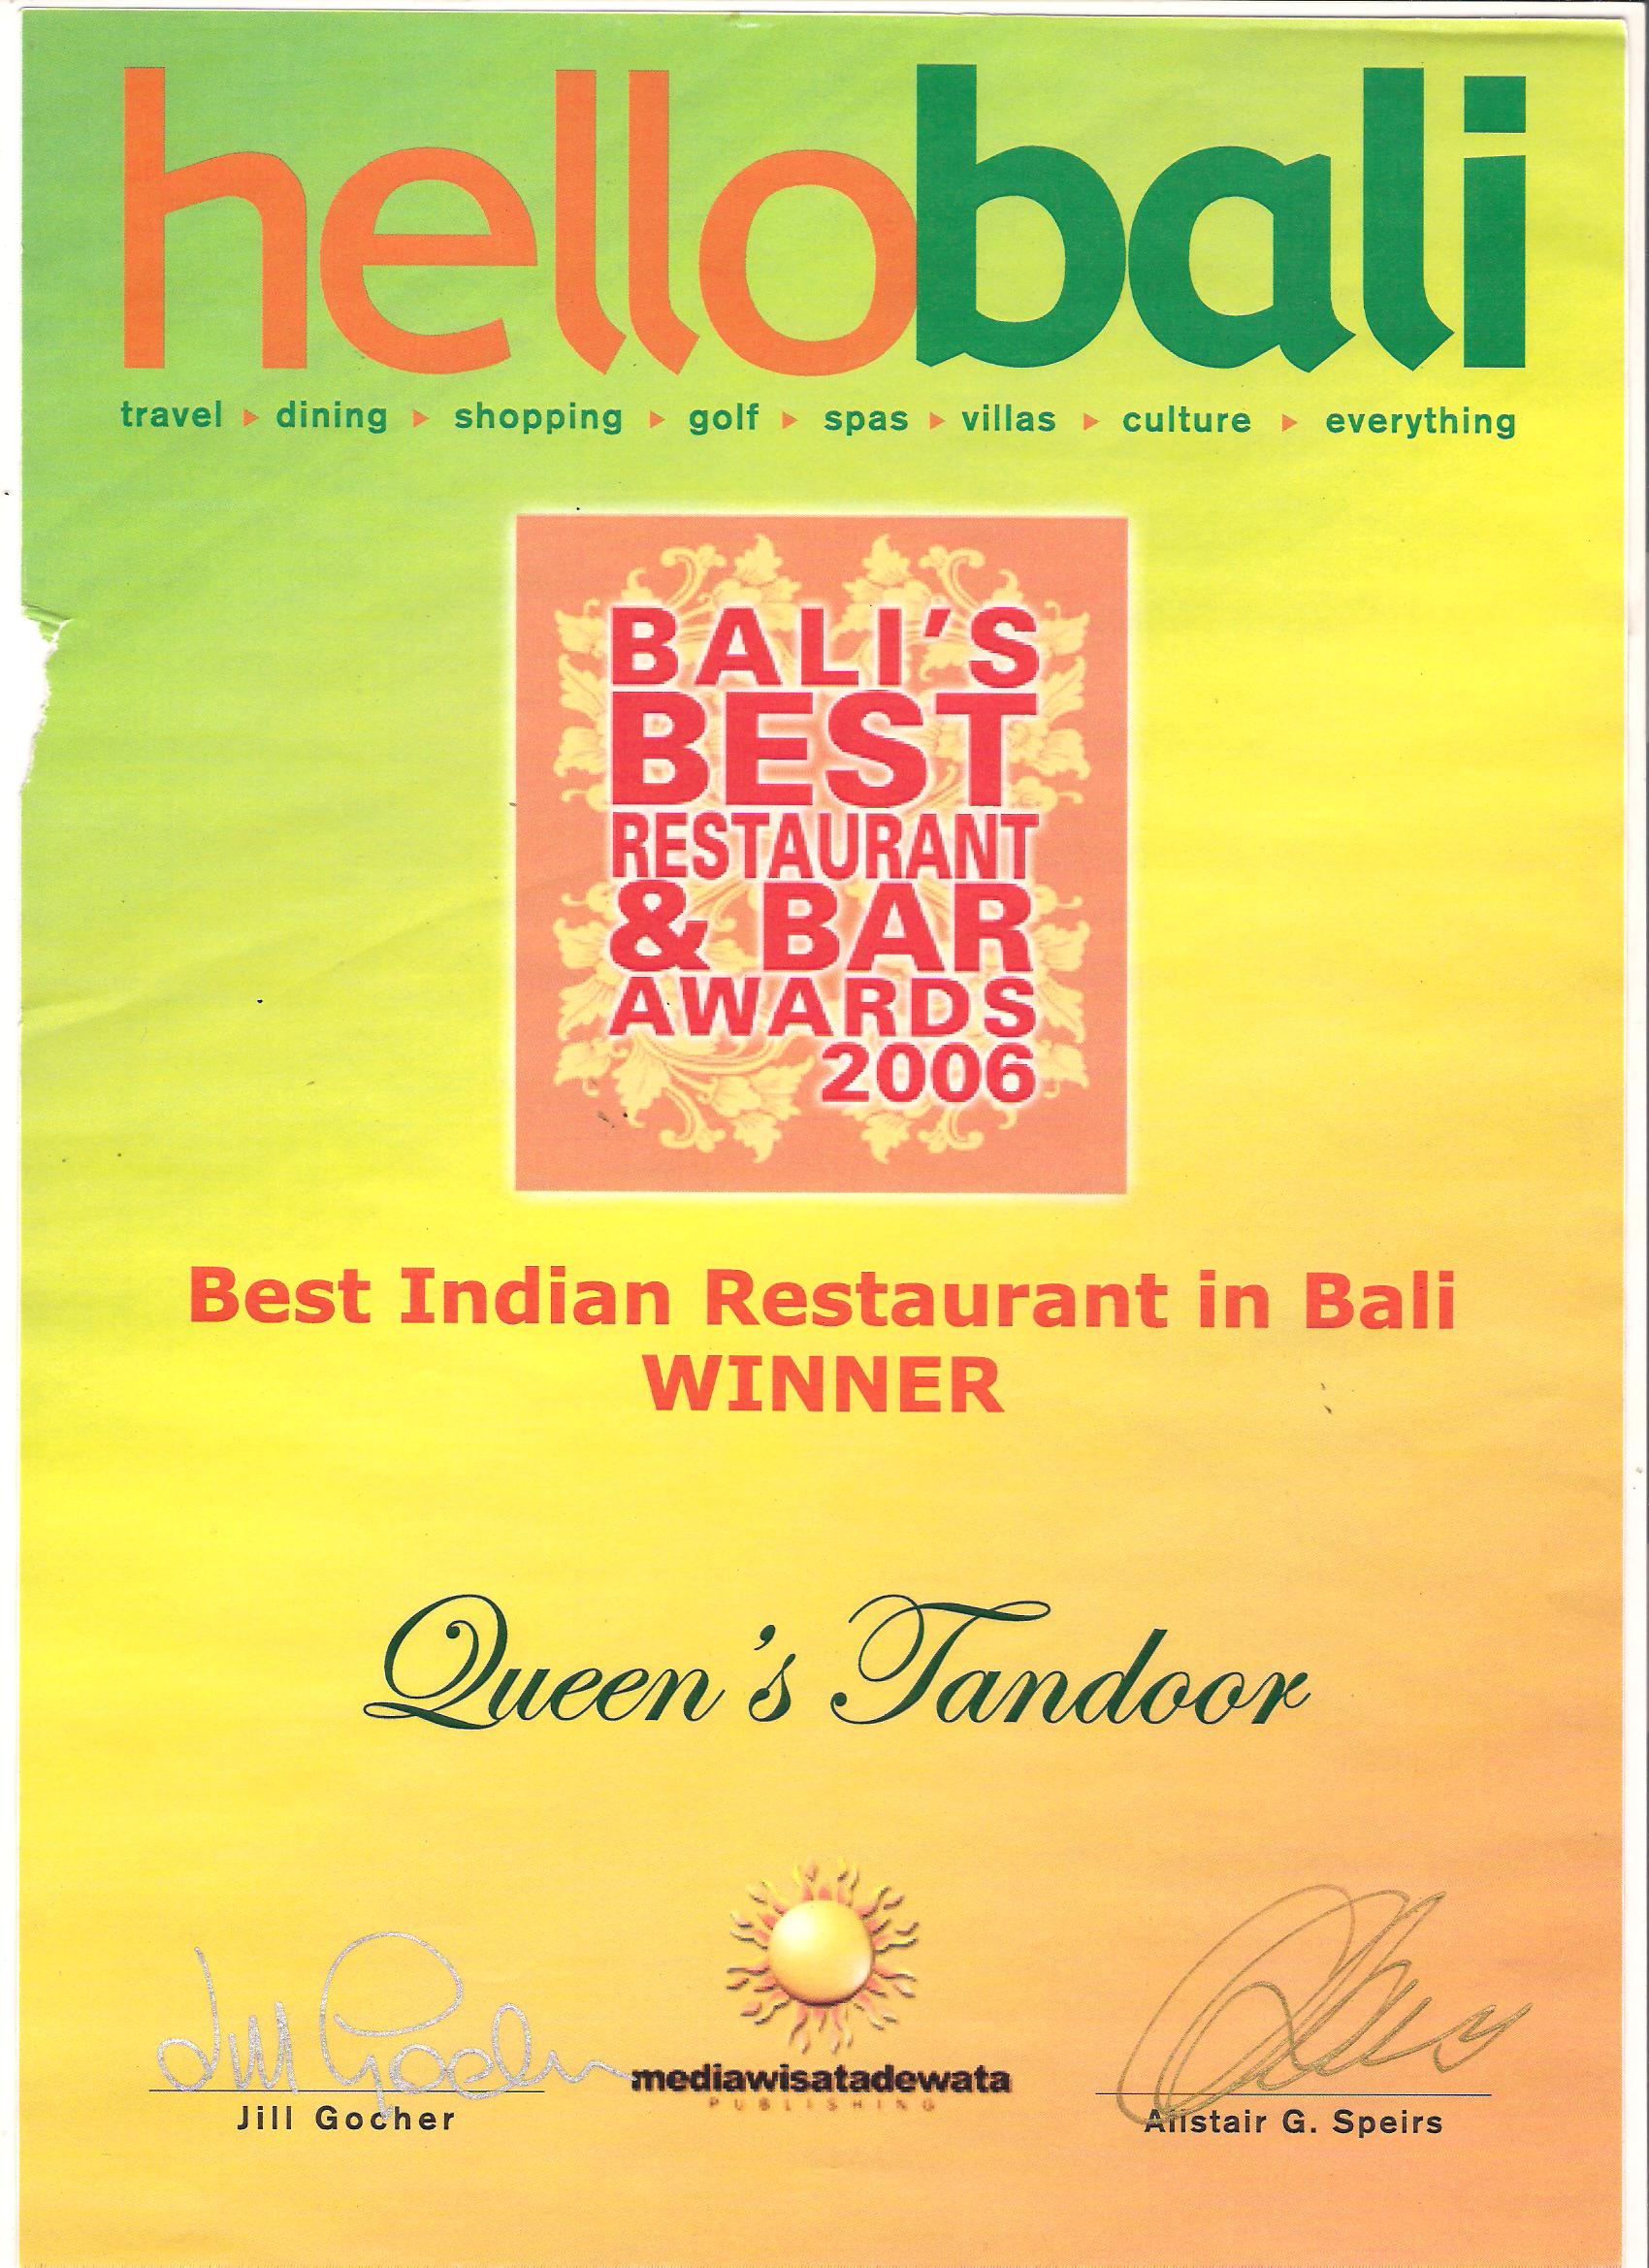 Hello Bali Award 2006 - Best Indian Restaurant in Bali